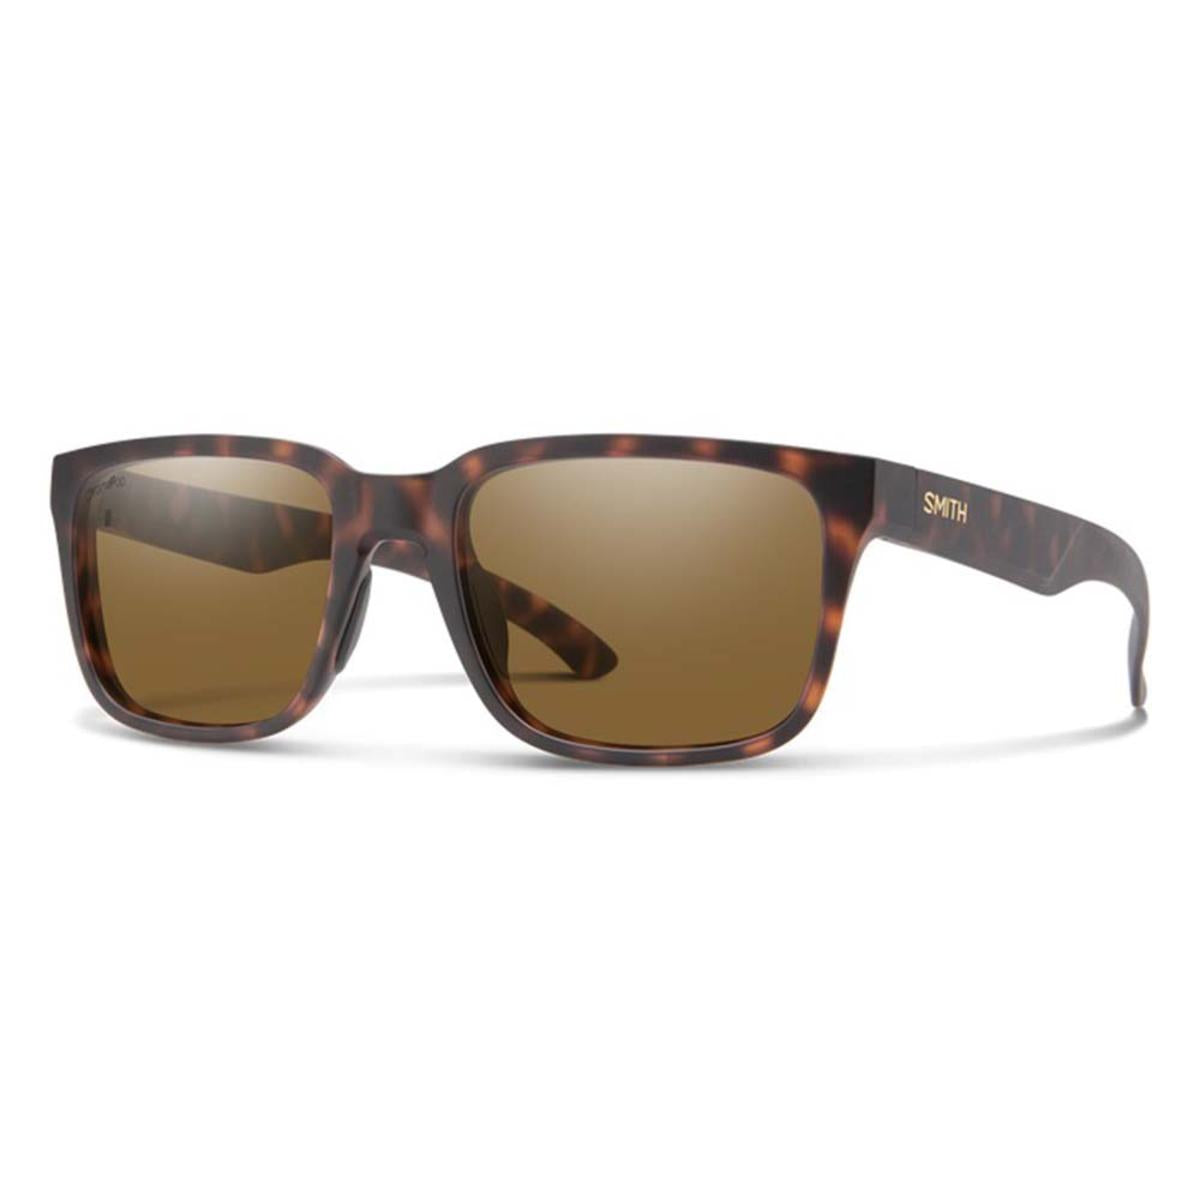 Smith Optics Headliner Sunglasses ChromaPop Polarized Brown Mirror - Matte Tortoise Frame